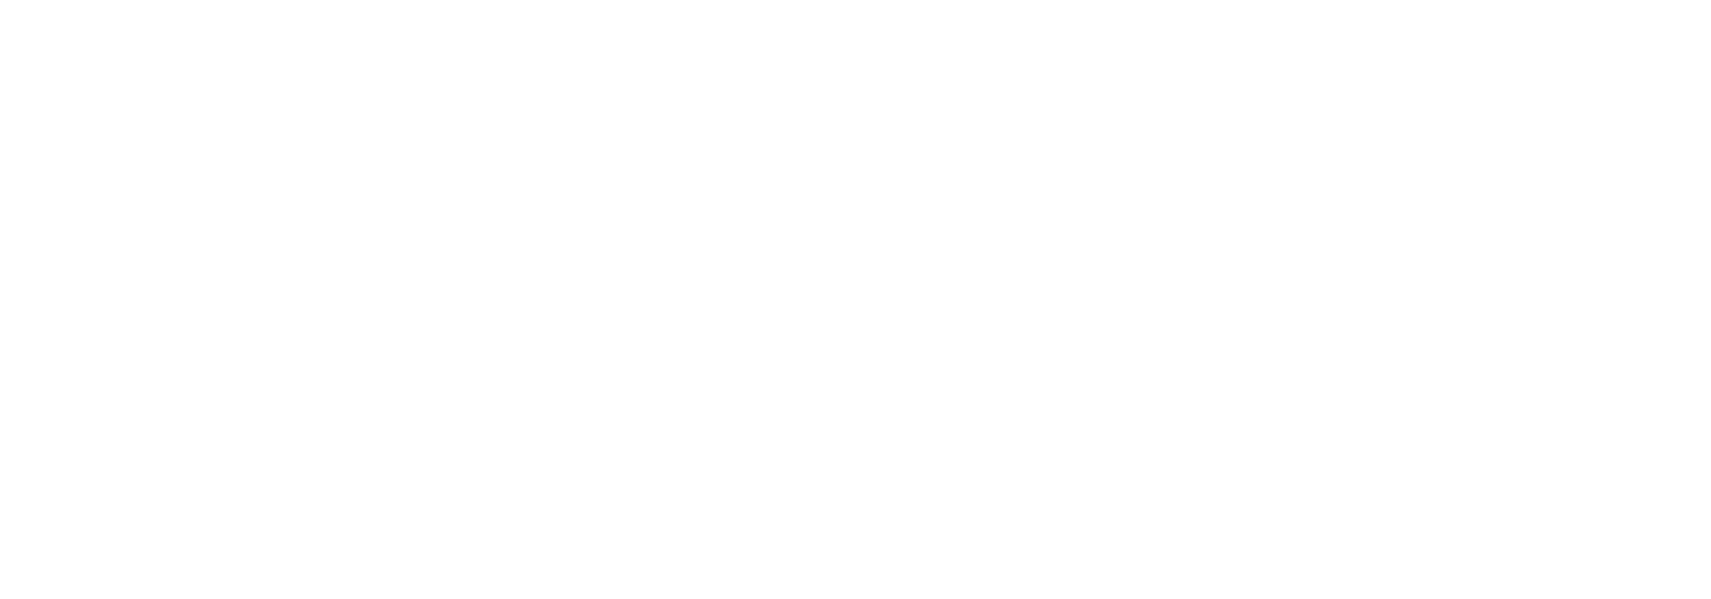 Imagine Fashion logo